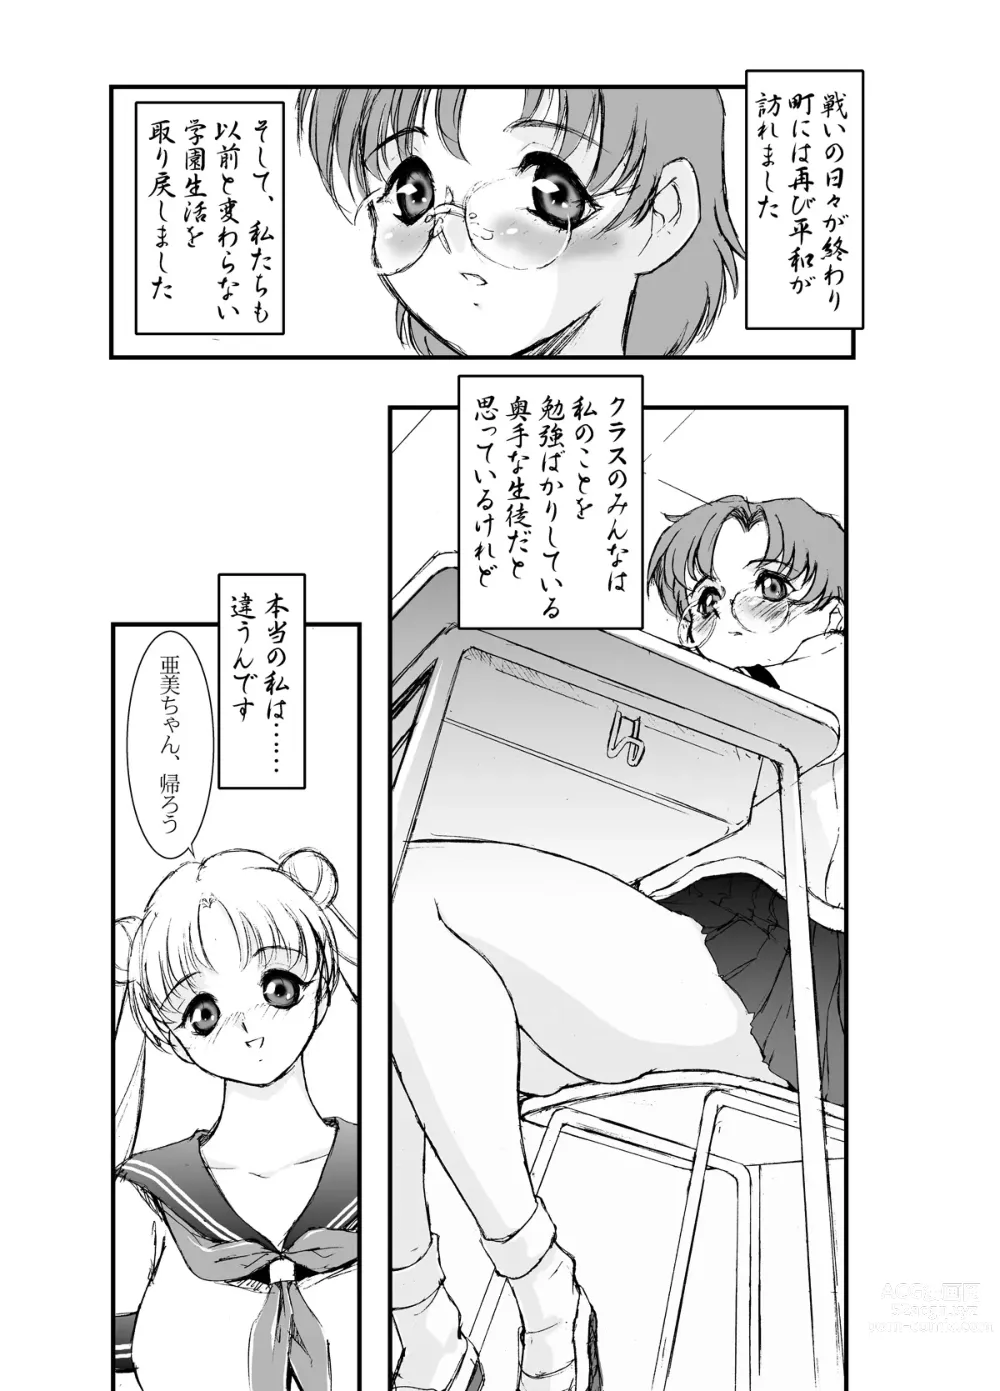 Page 10 of doujinshi SM